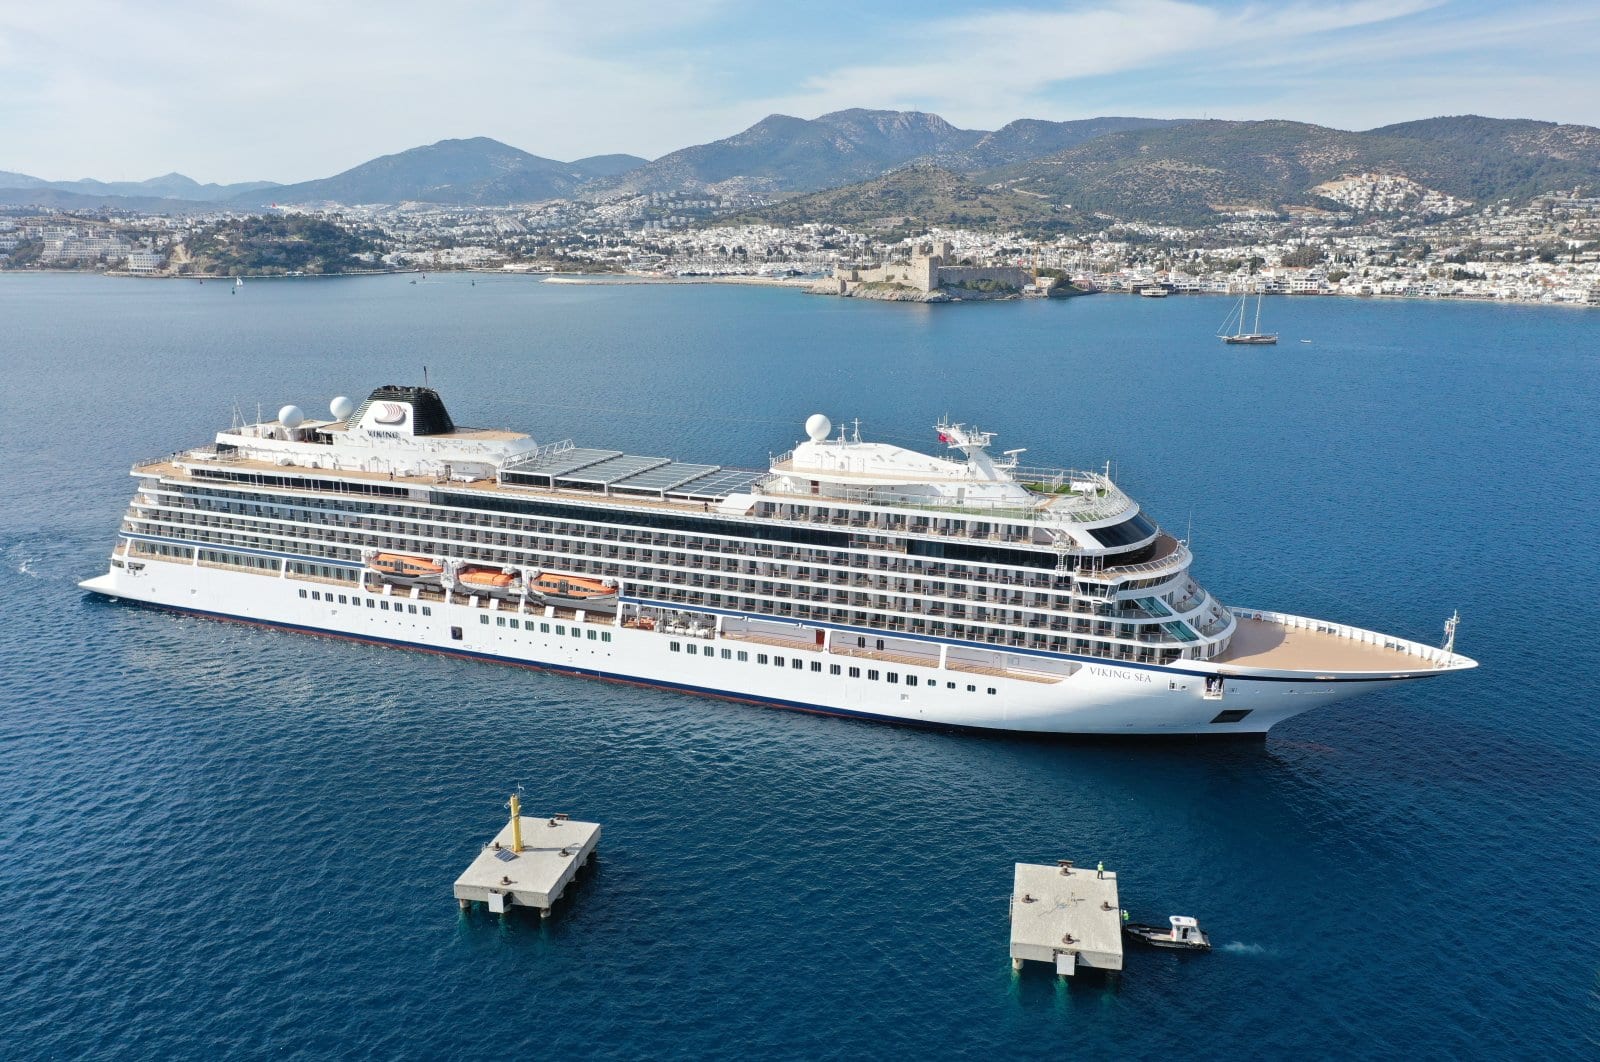 Turkey welcomes 1st cruise ship of season